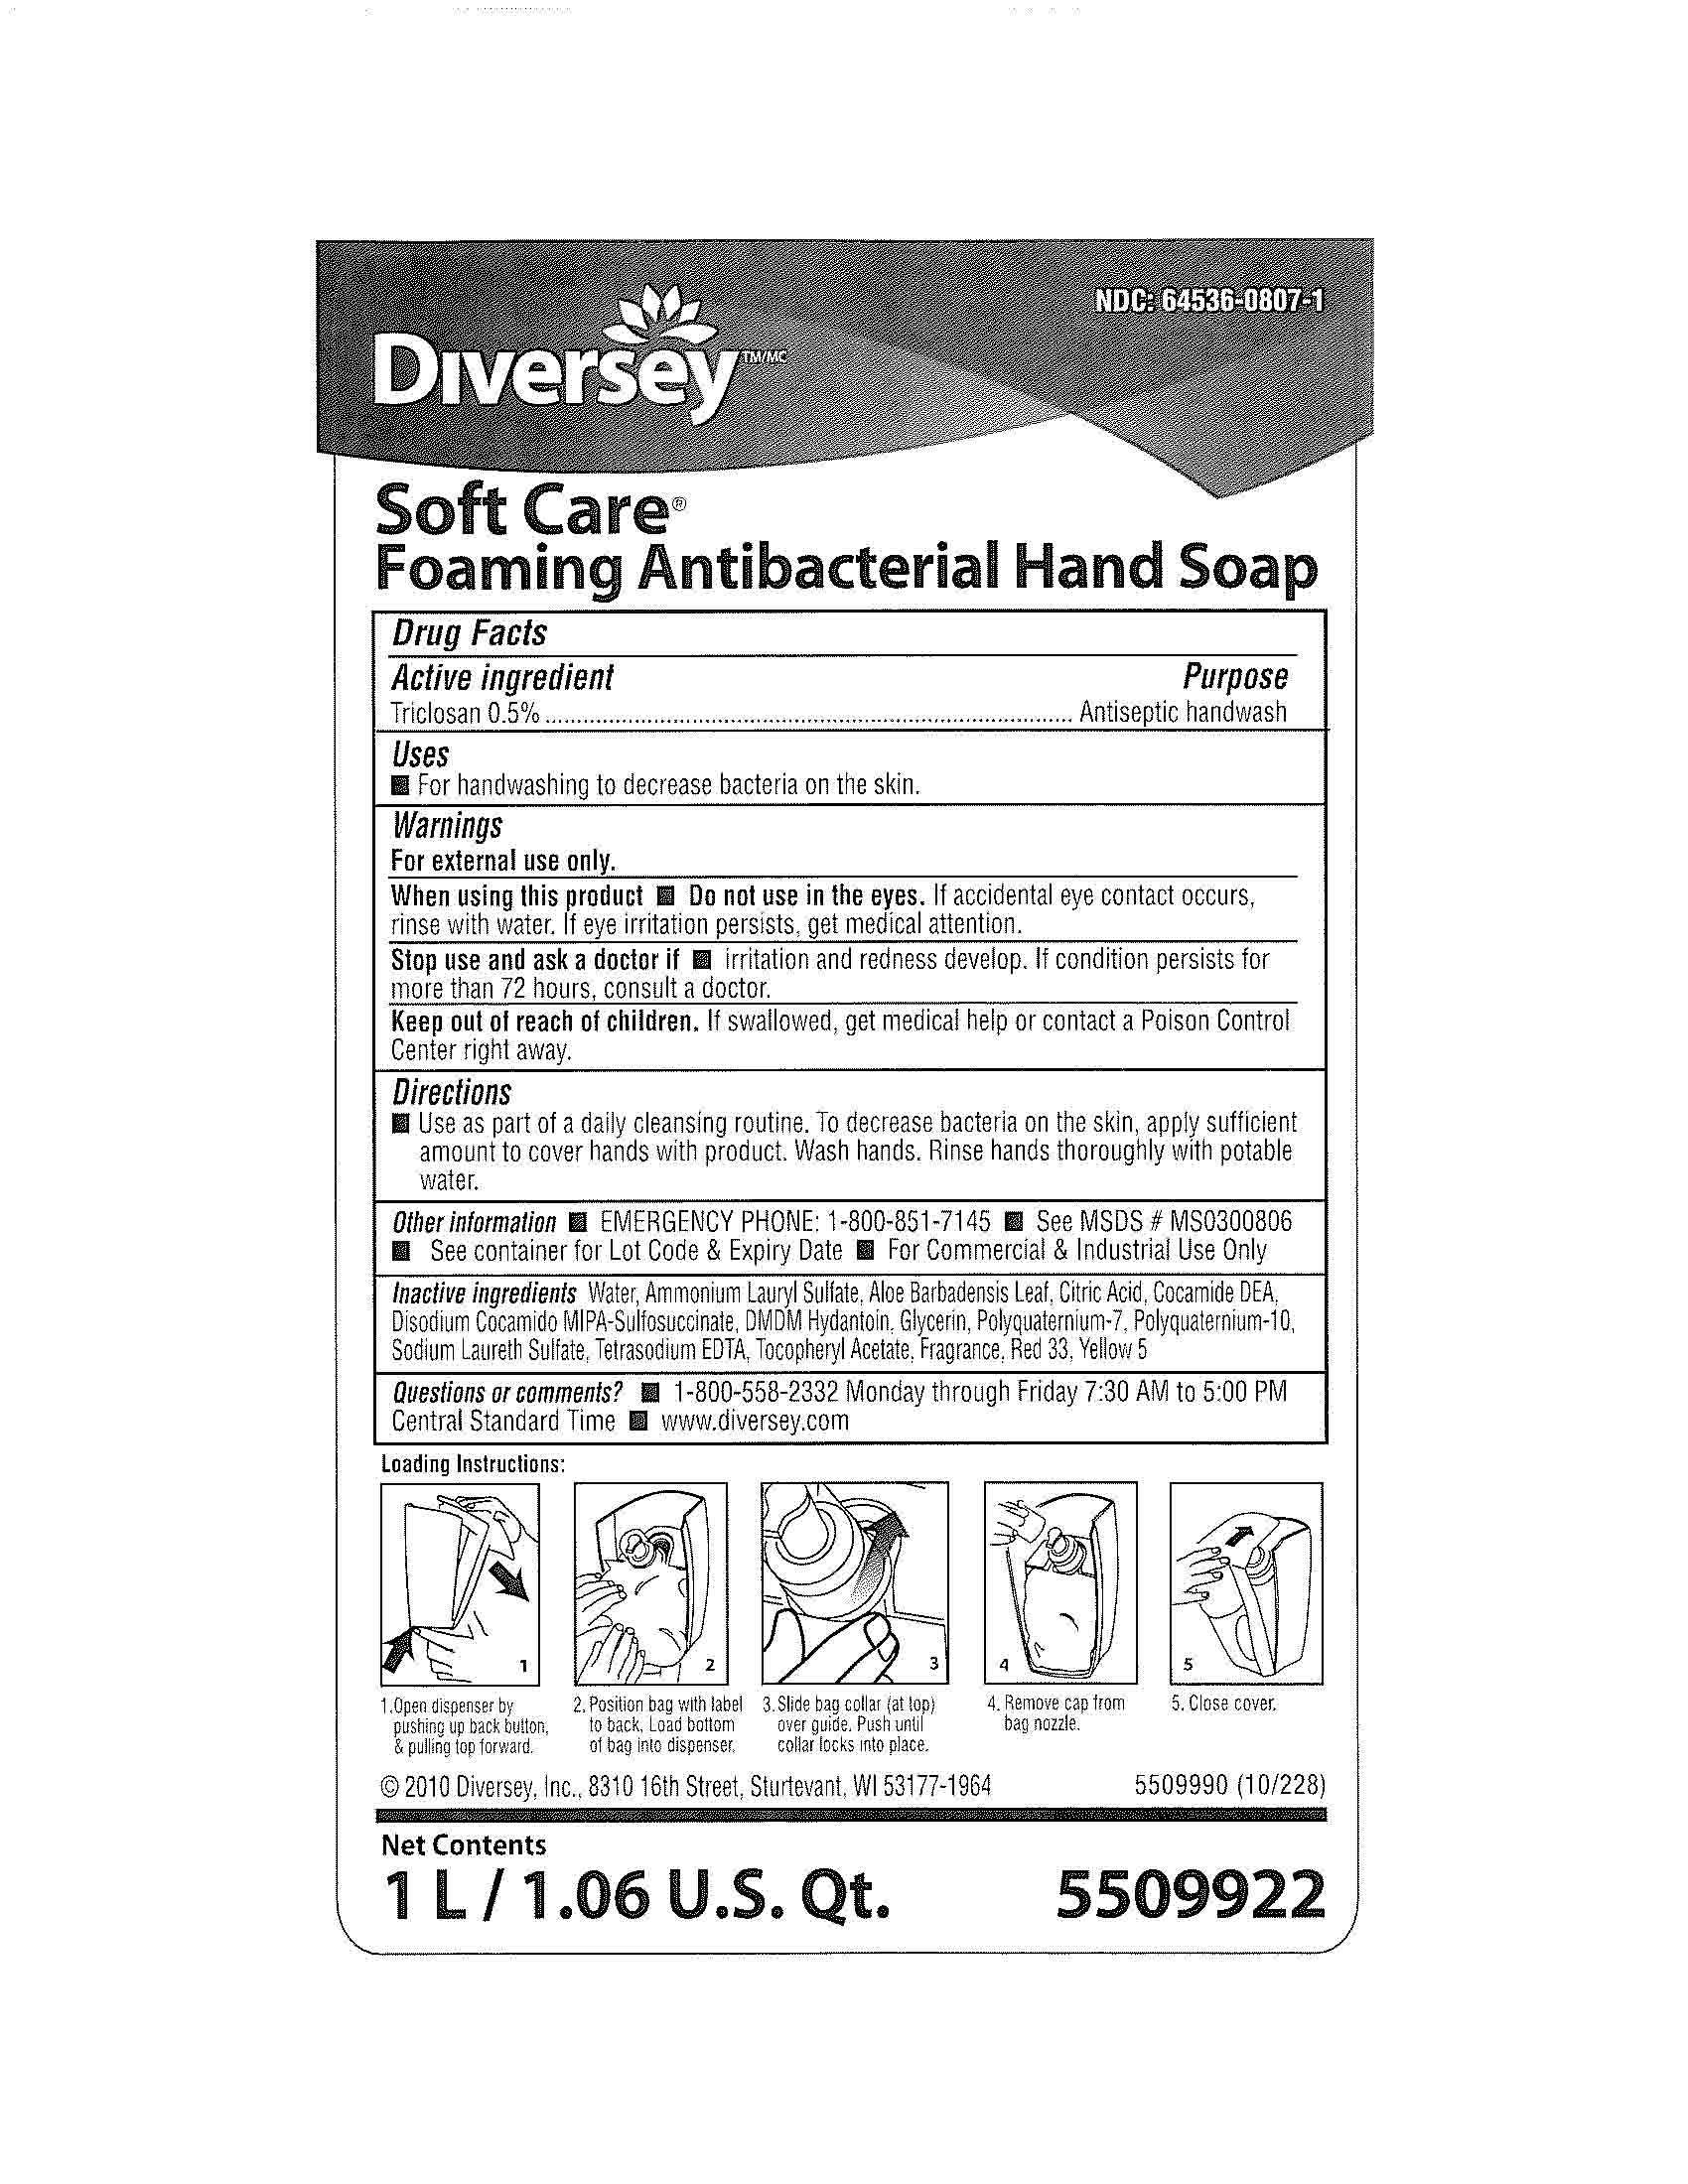 Soft Care Foaming Antibacterial Hand